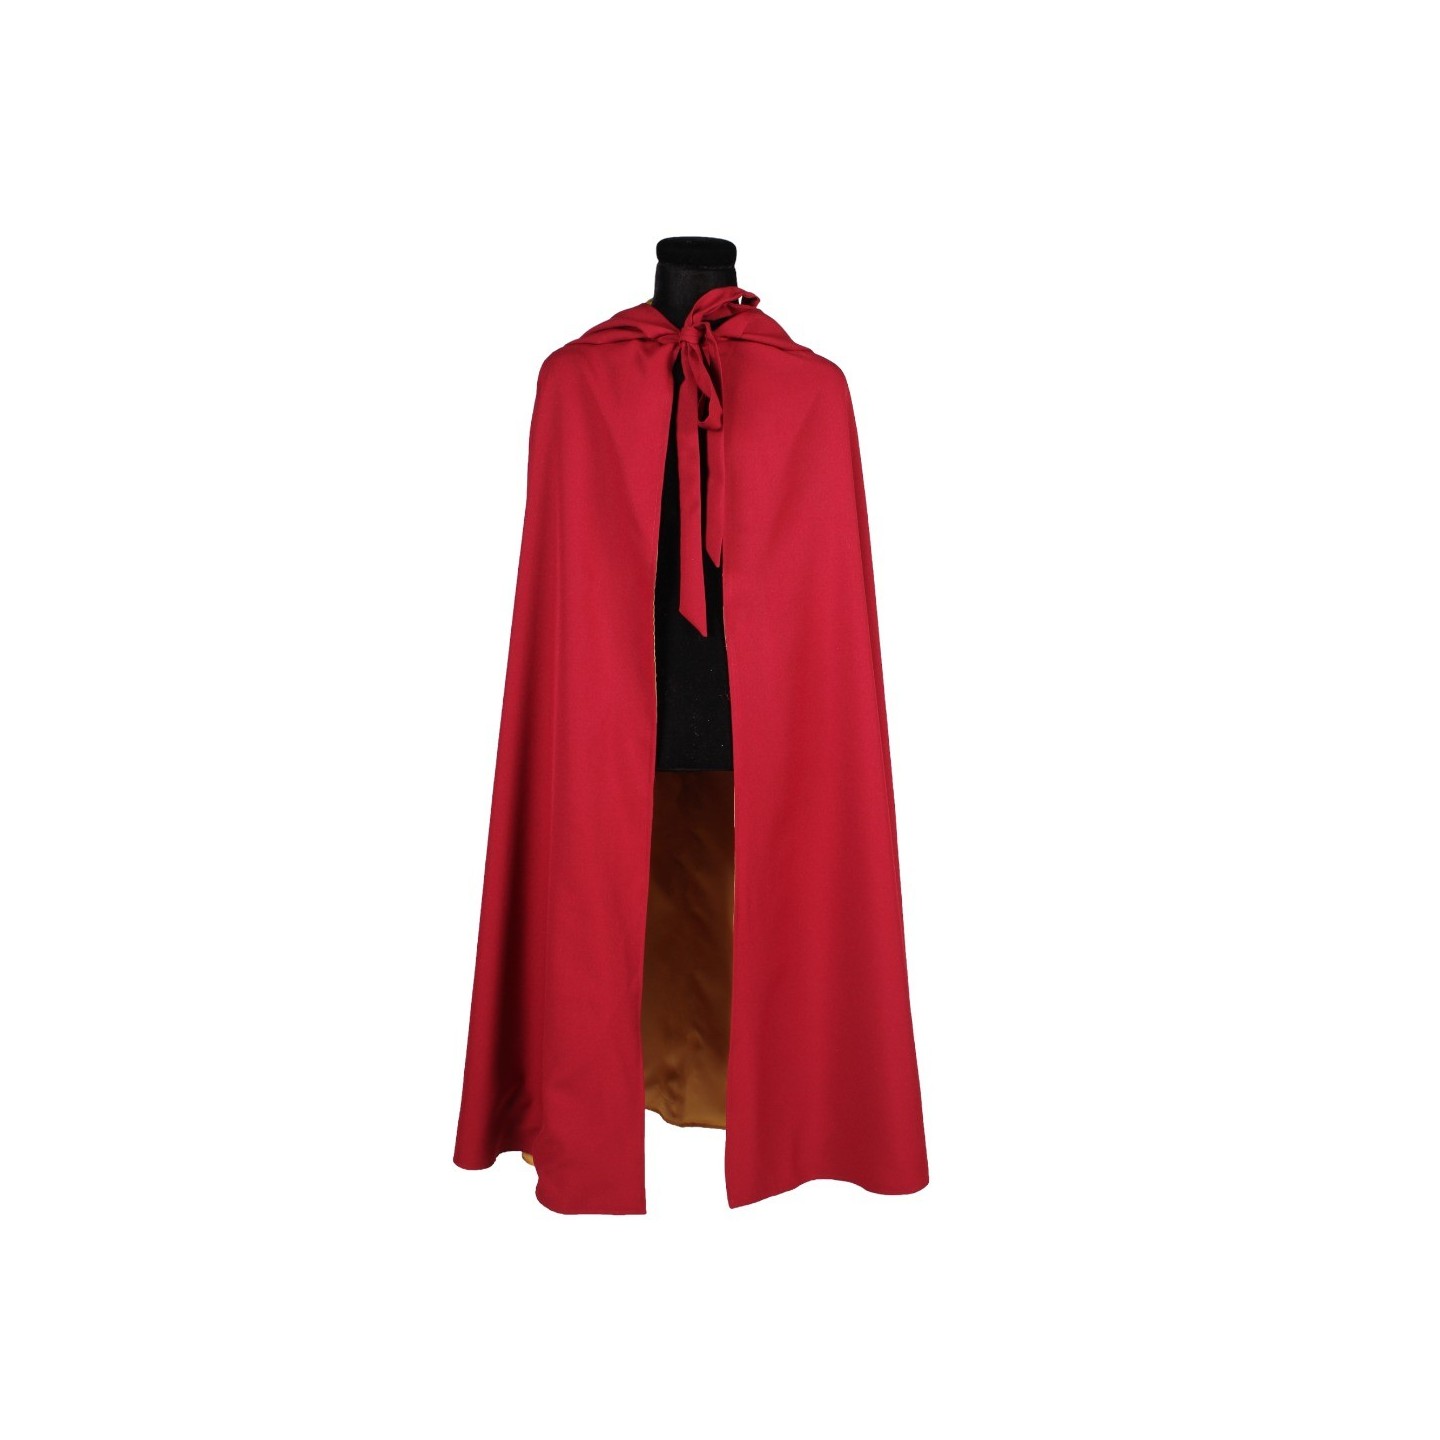 rode cape met kap capuchon mantel